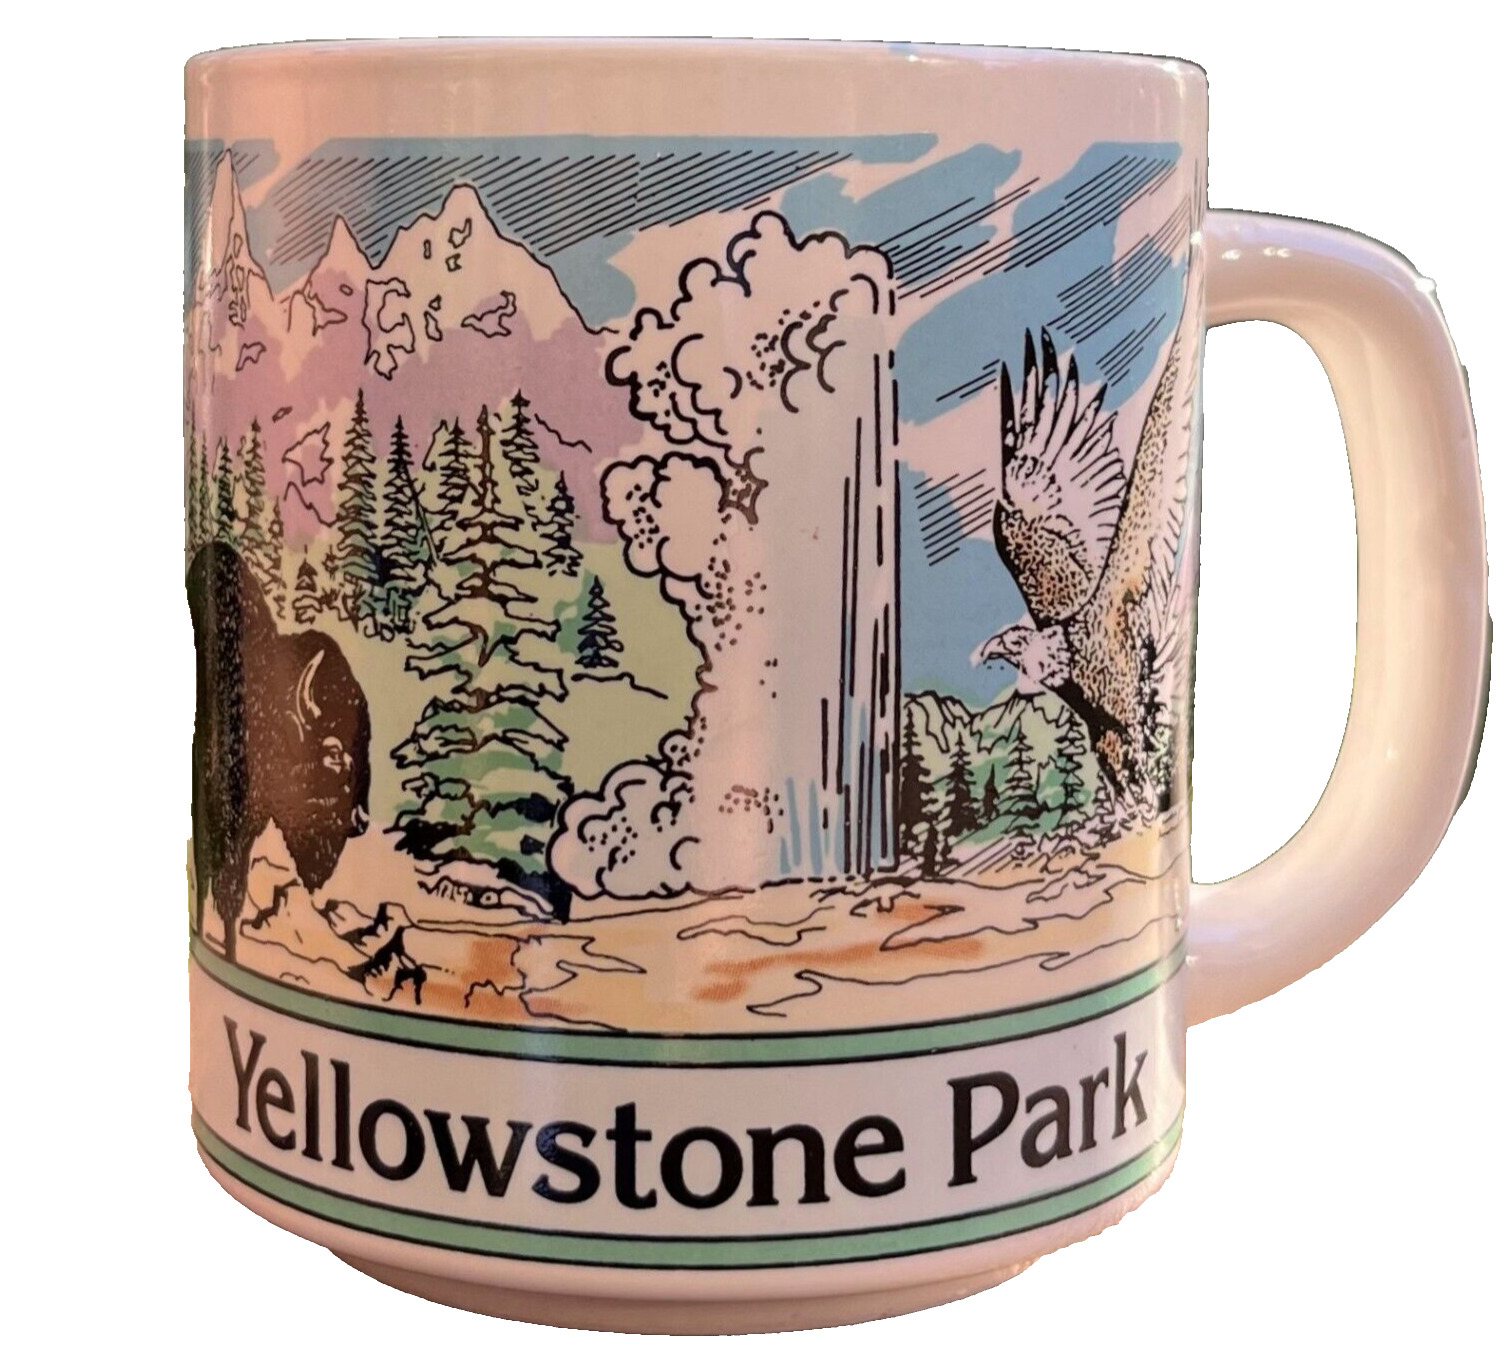 Yellowstone National Park Ceramic Cup / Mug Wildlife Preserve Colorado Souvenir